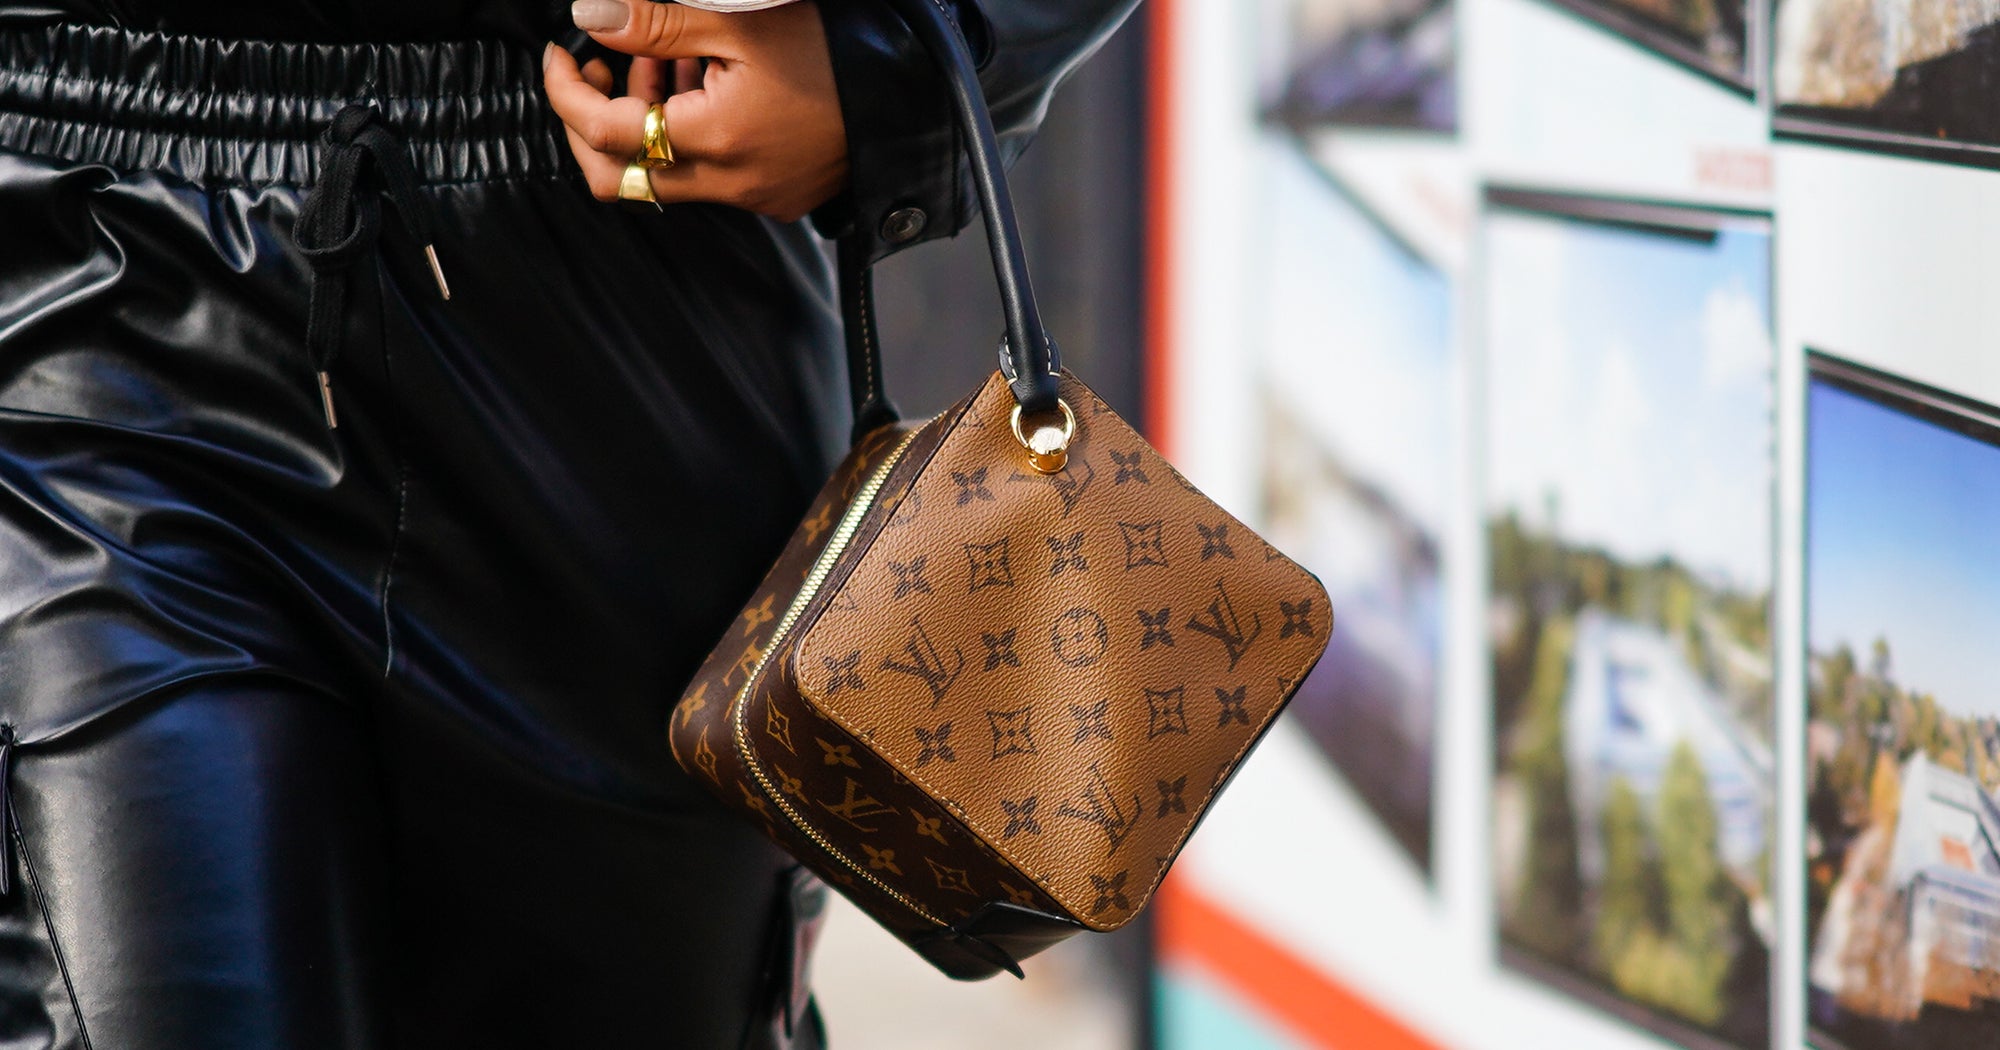 Here's an inside look at Louis Vuitton's Alvarado handbag workshop